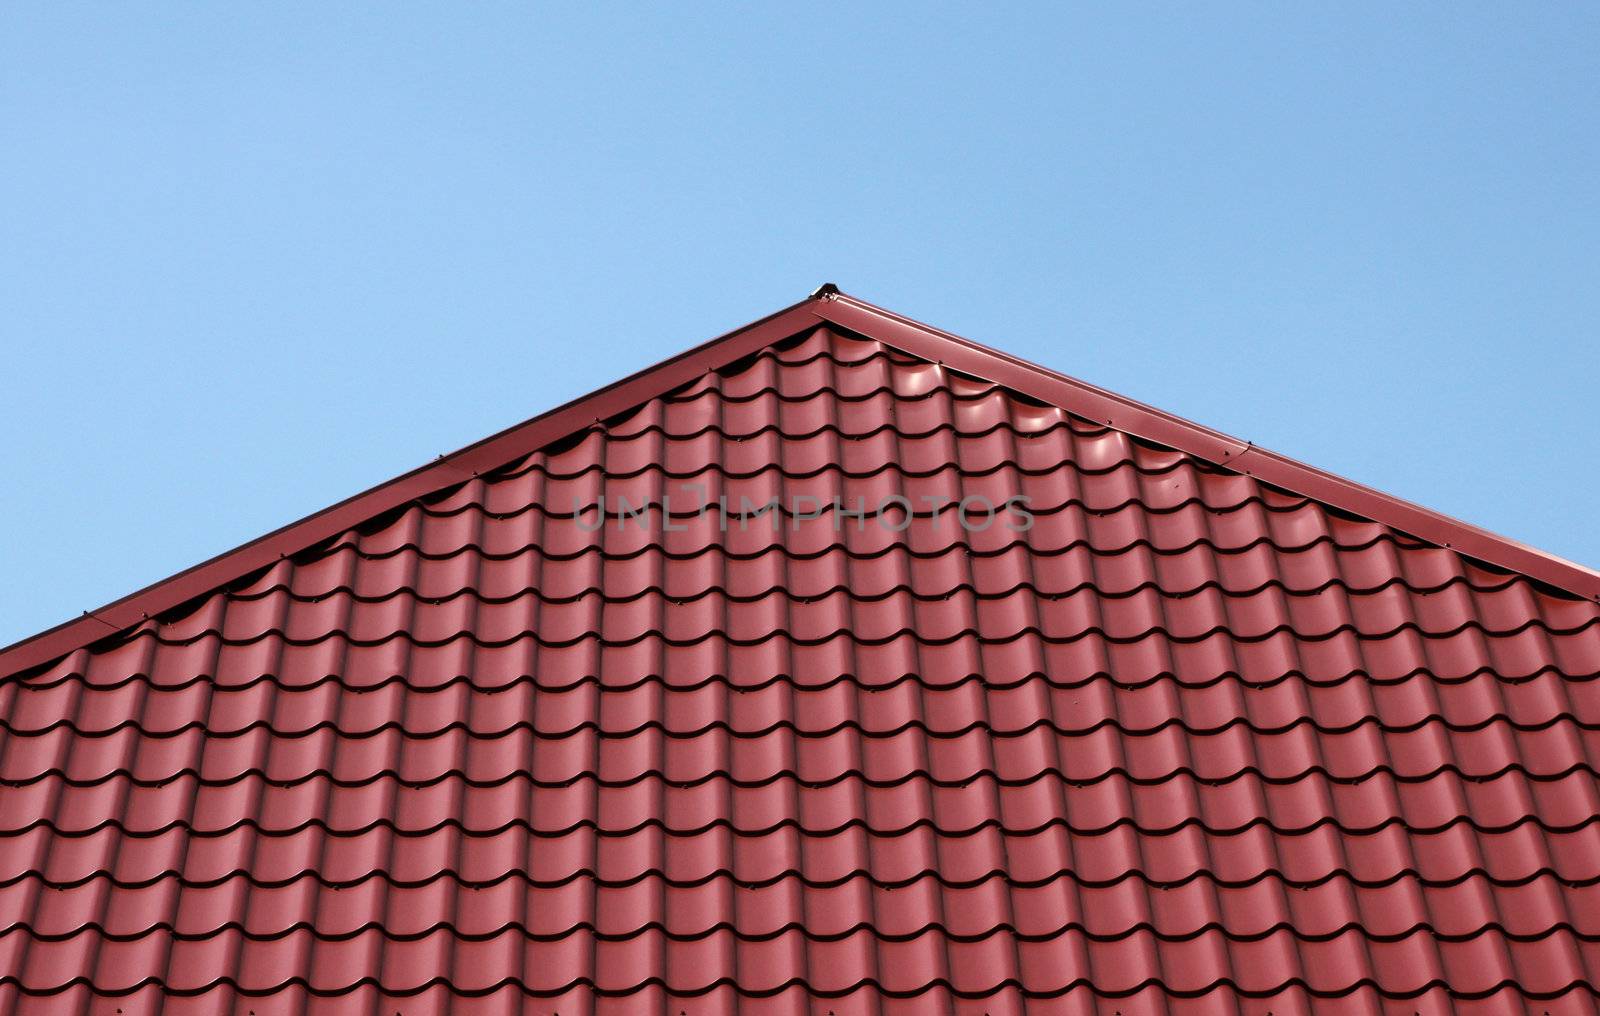 red tiled roof over blue sky